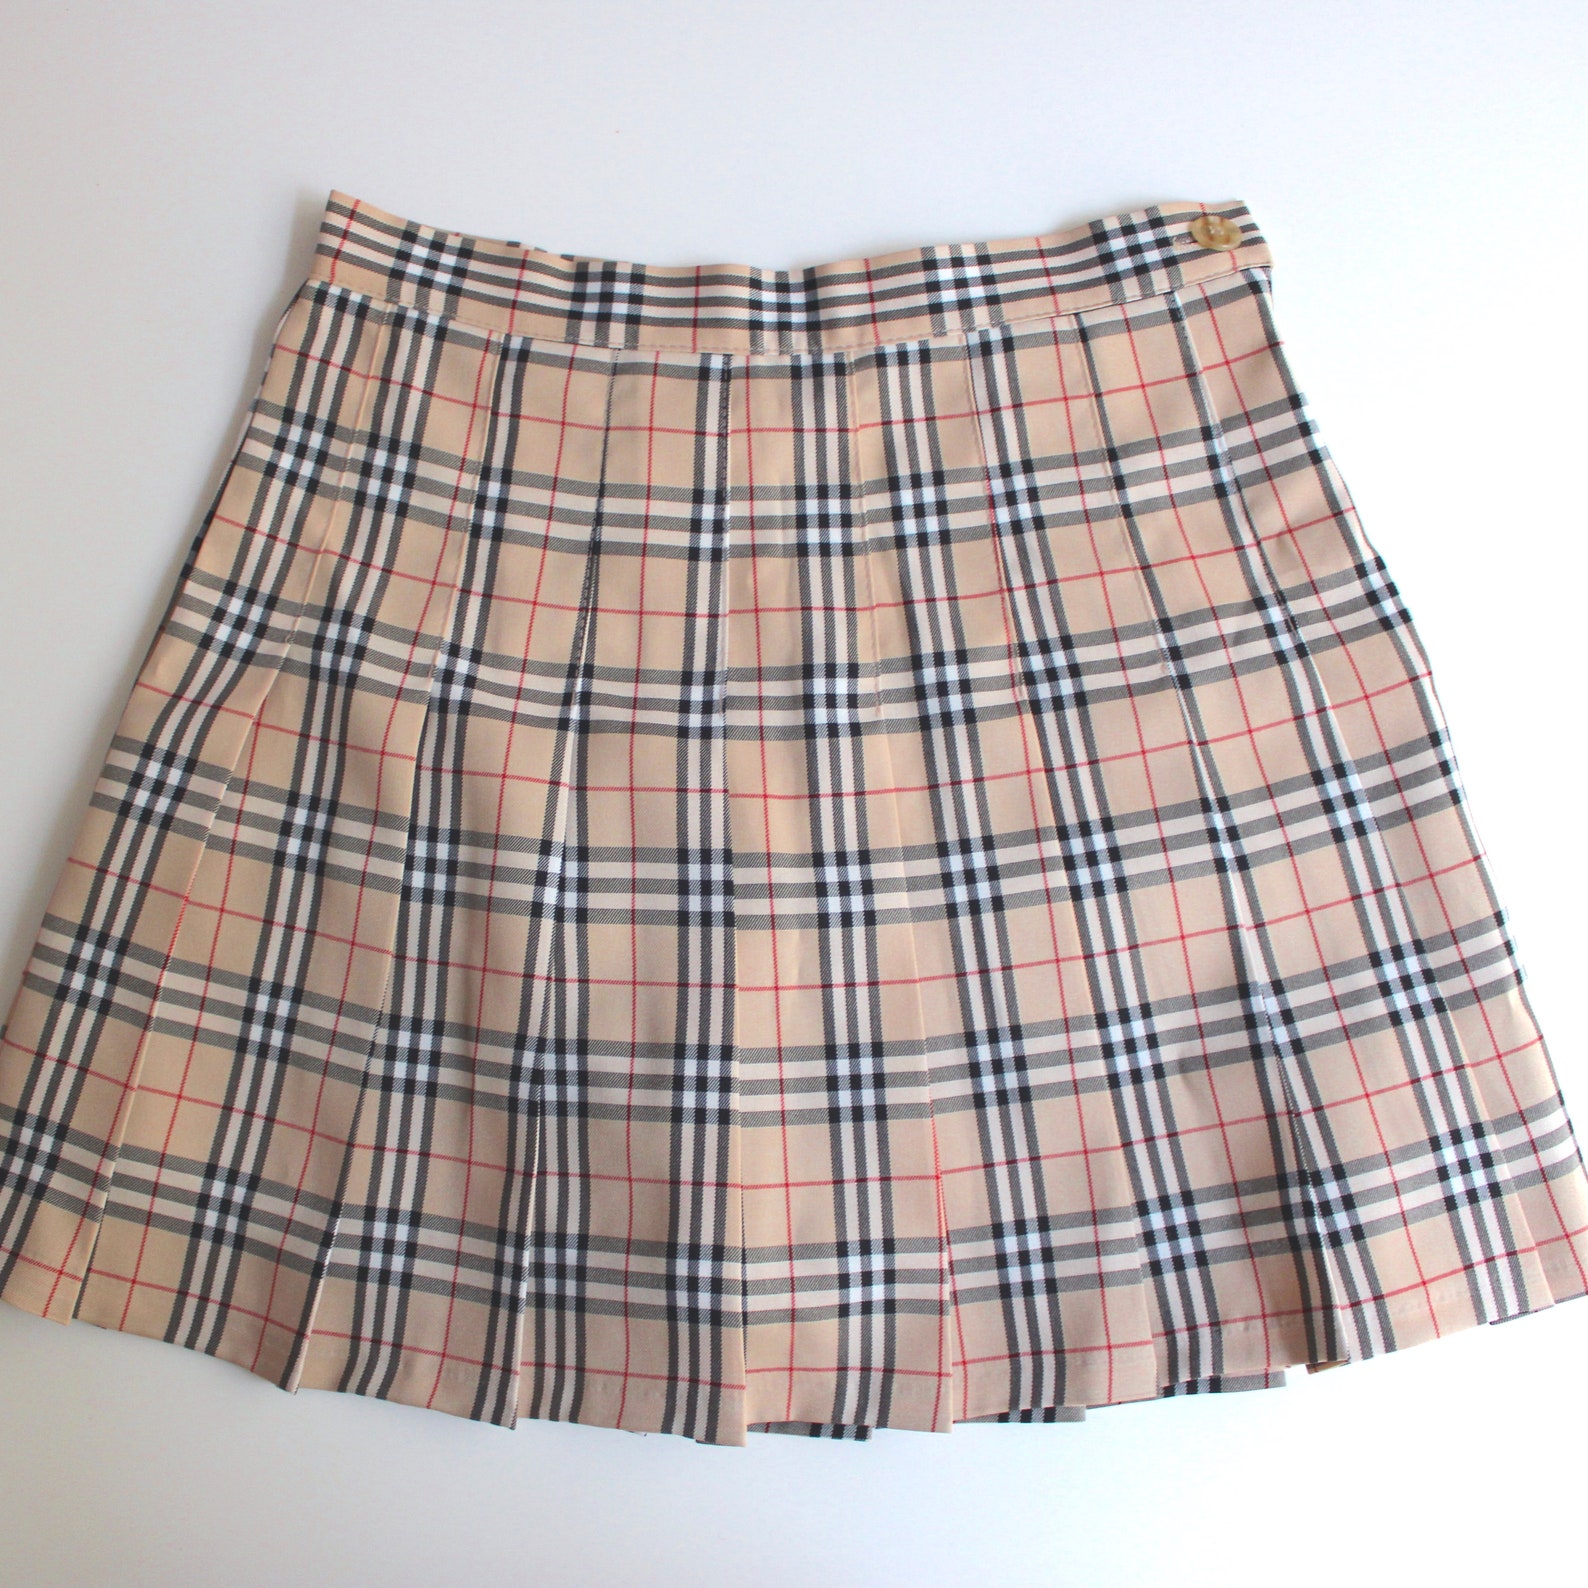 Beige plaid tennis skirt nova check checked print school girl | Etsy